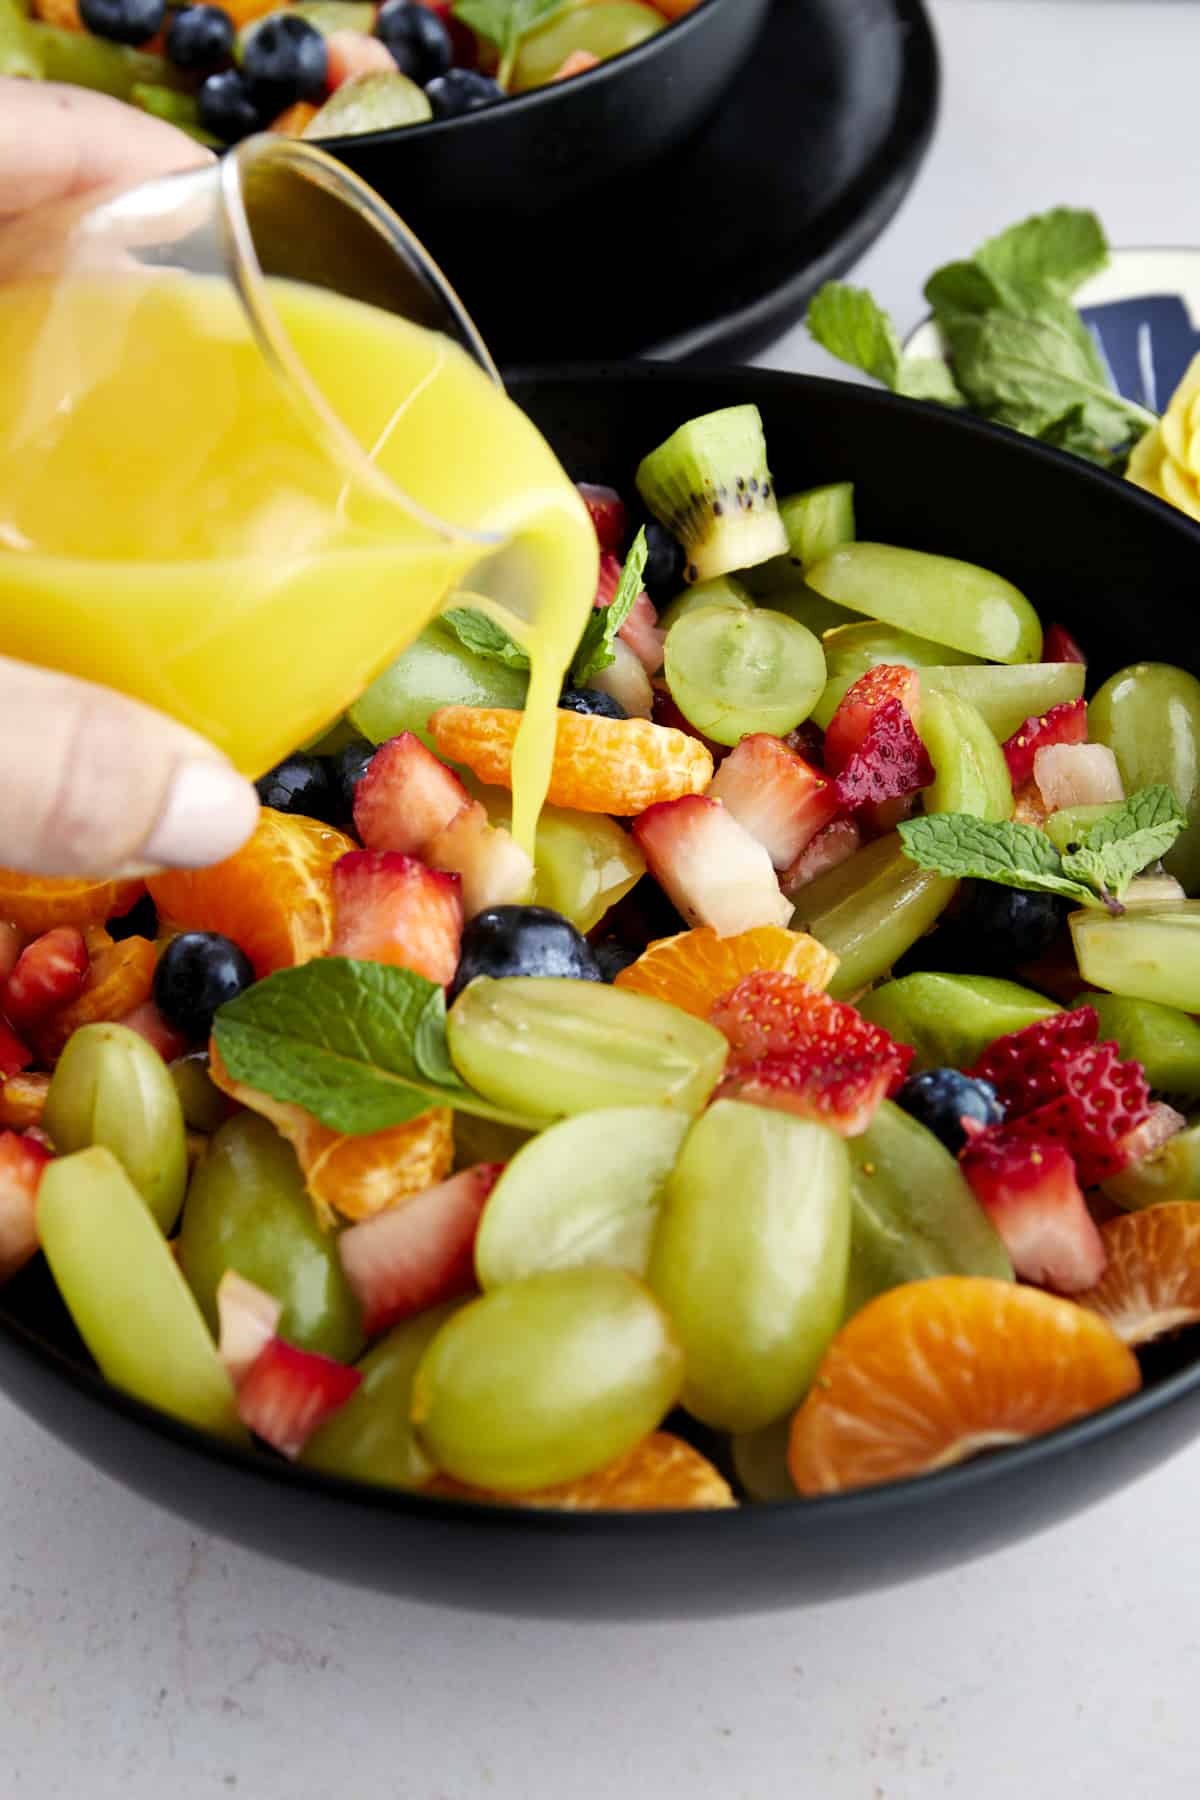 orange juice dressing being poured over a bowl of easy fruit salad